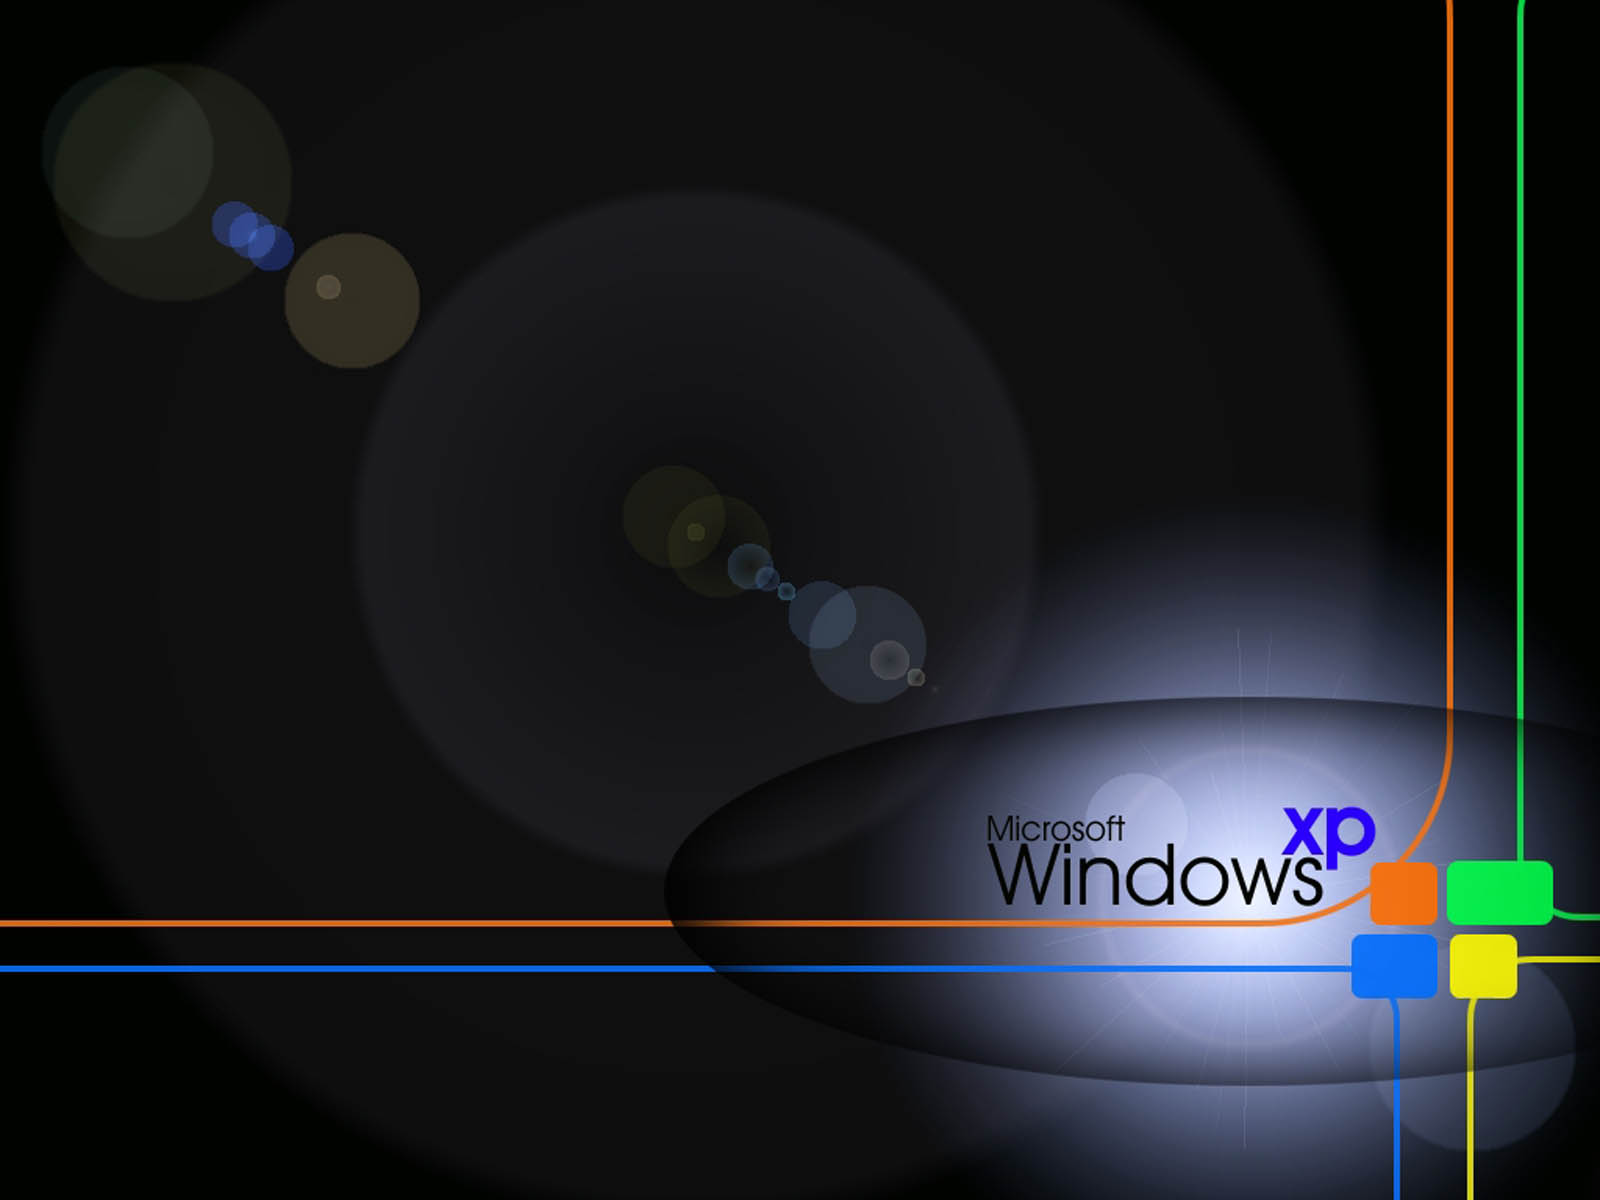 The Windows Xp Wallpaper Desktop